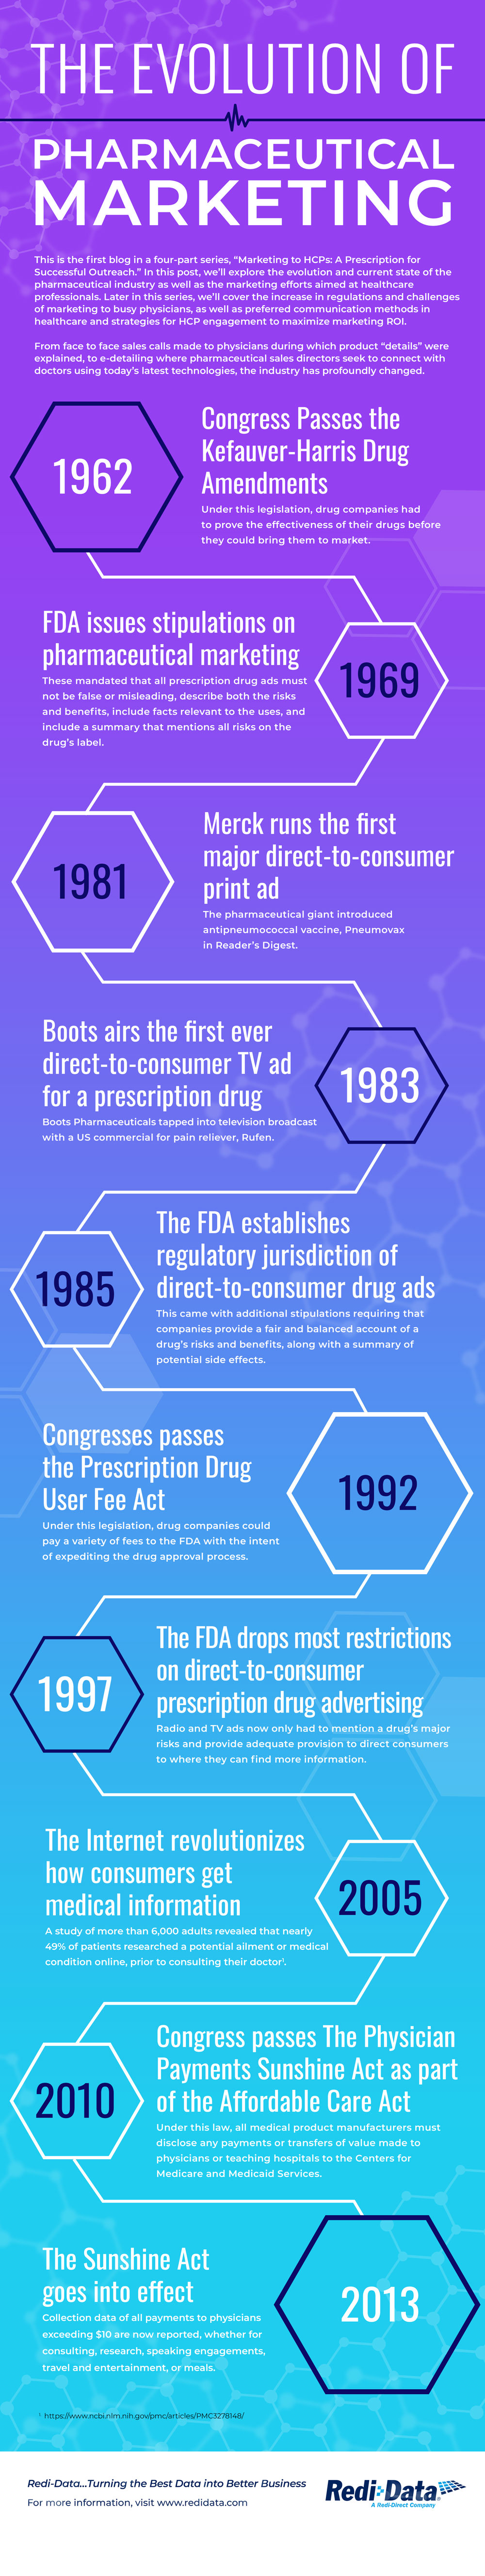 The Evolution of Pharmaceutical Marketing